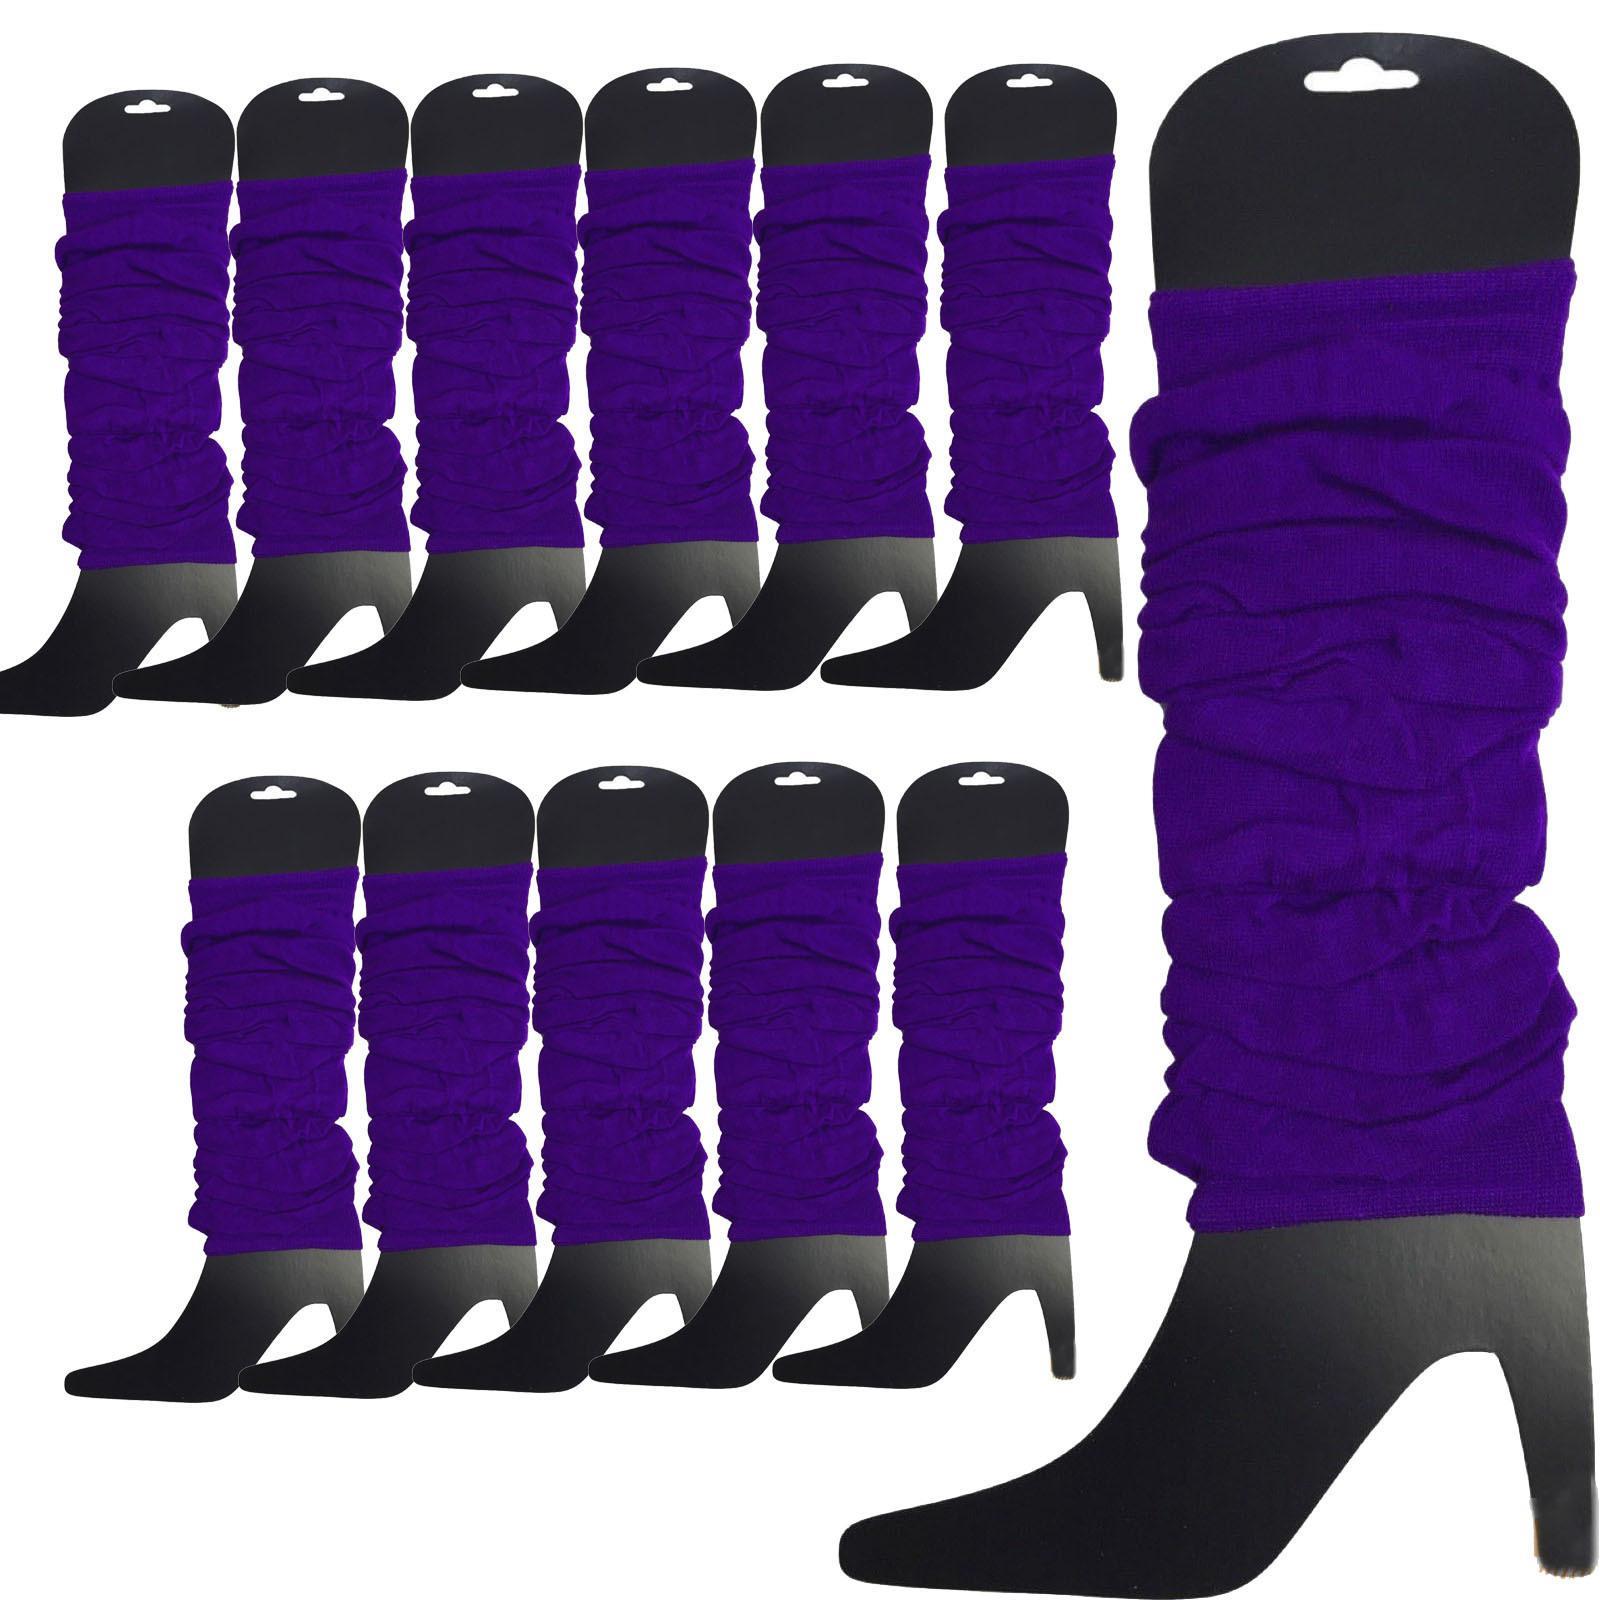 12 LEG WARMERS Knitted Womens Neon Party Knit Ankle Fluro Dance Costume 80s BULK - Purple